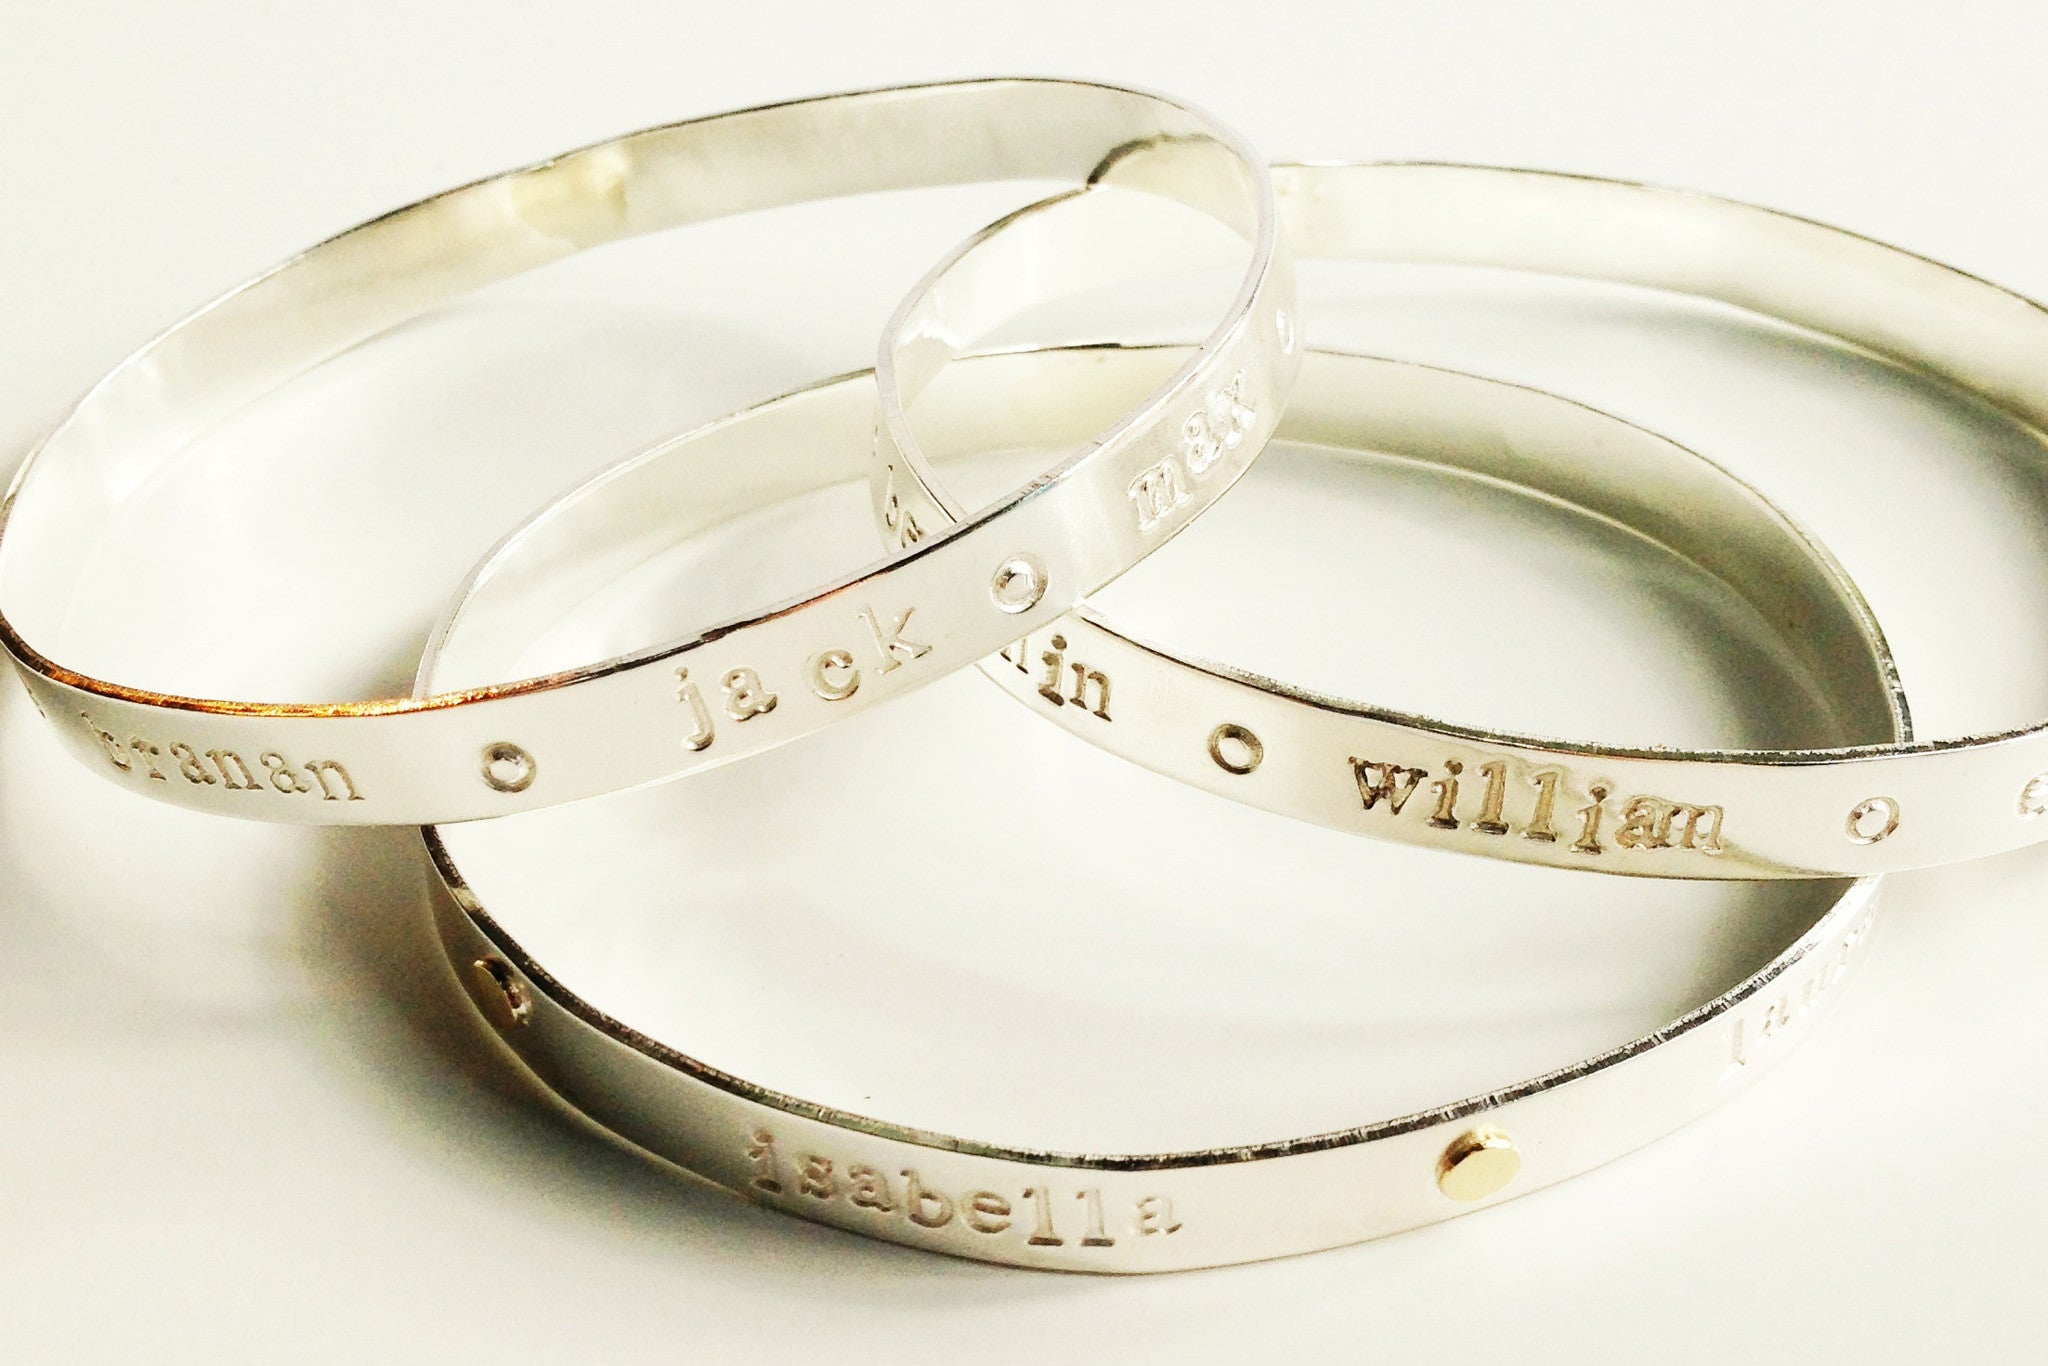 Buy/Send Personalised Mens Engraved Silver Bracelet Online- FNP